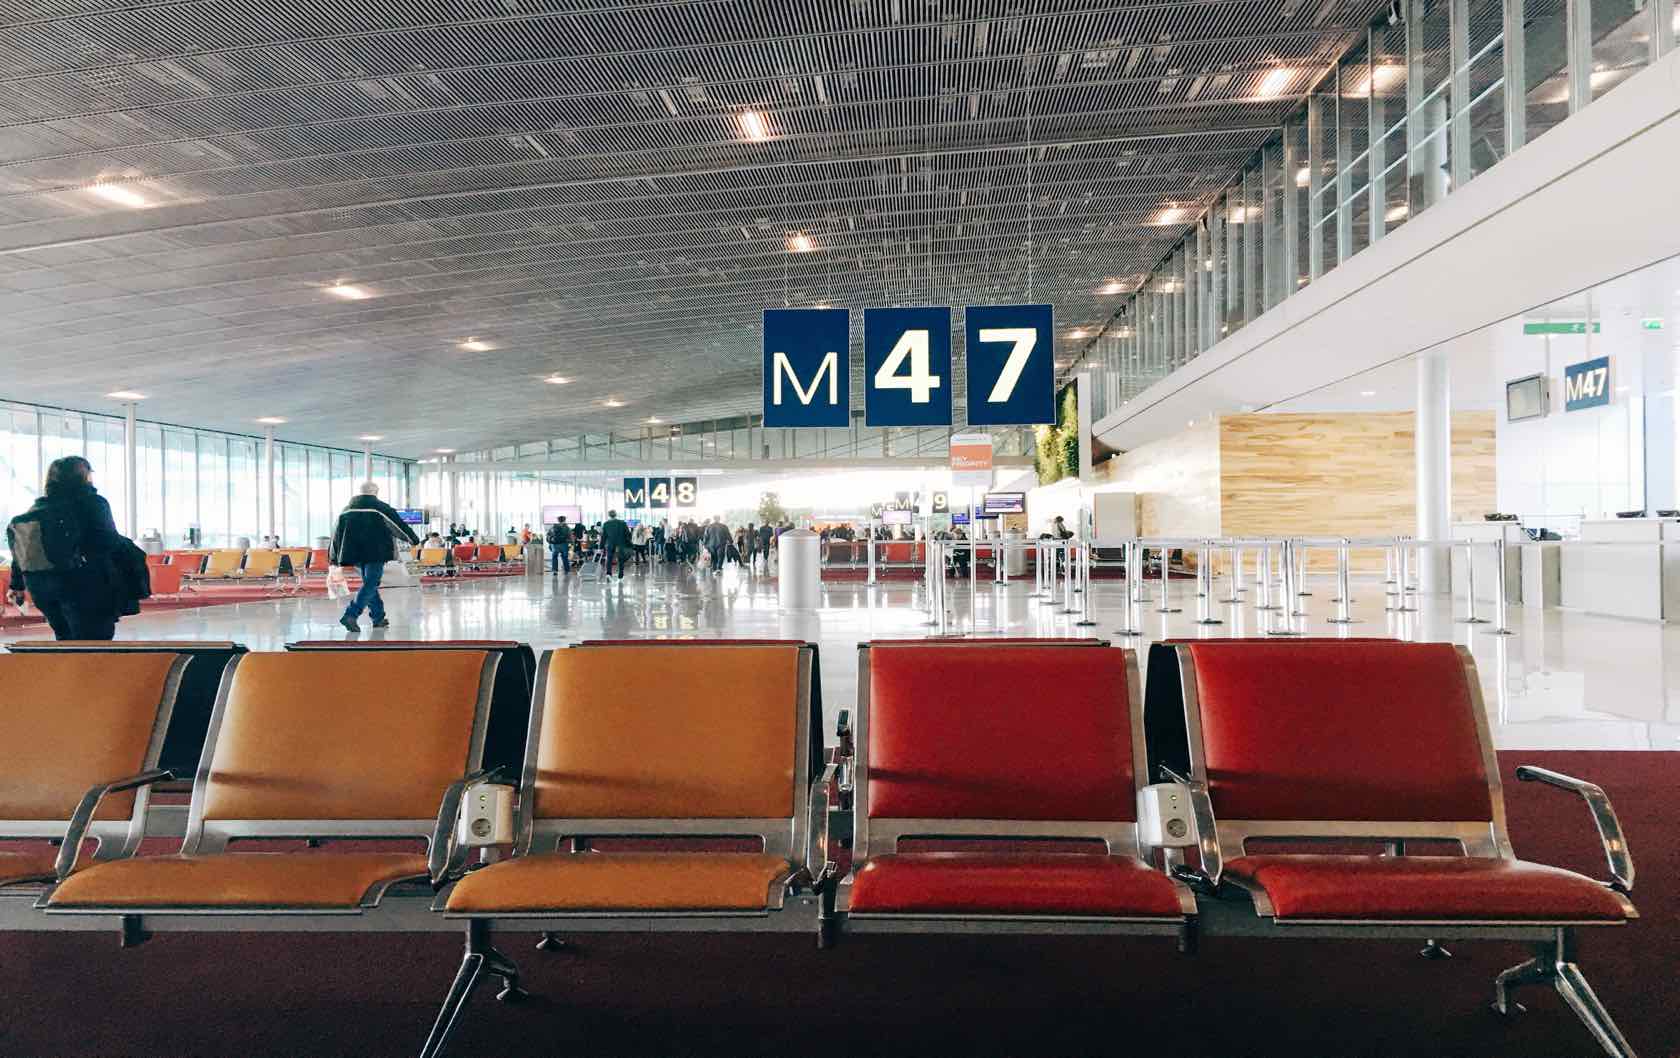 Charles de Gaulle Airport, Paris, = = = = = = = = = = = = =…